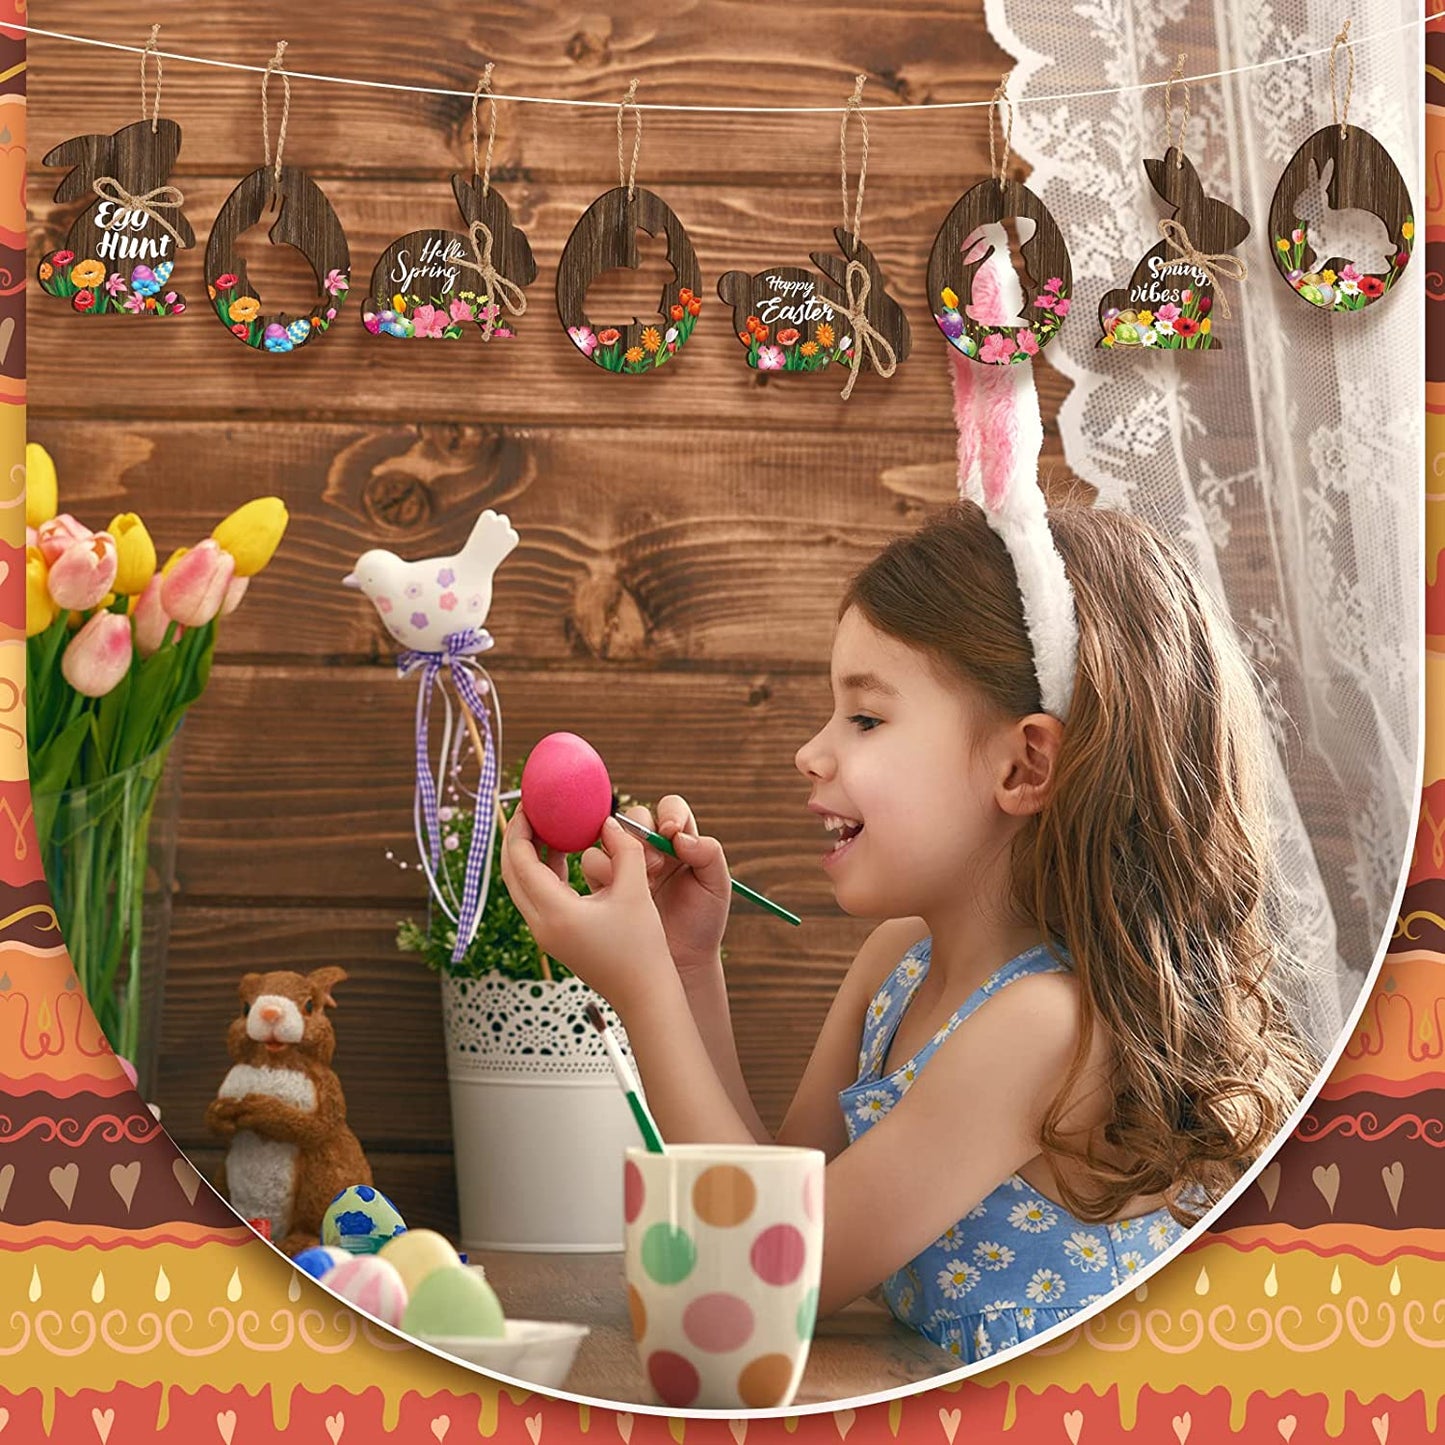 40 Pcs Easter Wooden Ornaments Vintage Bunny